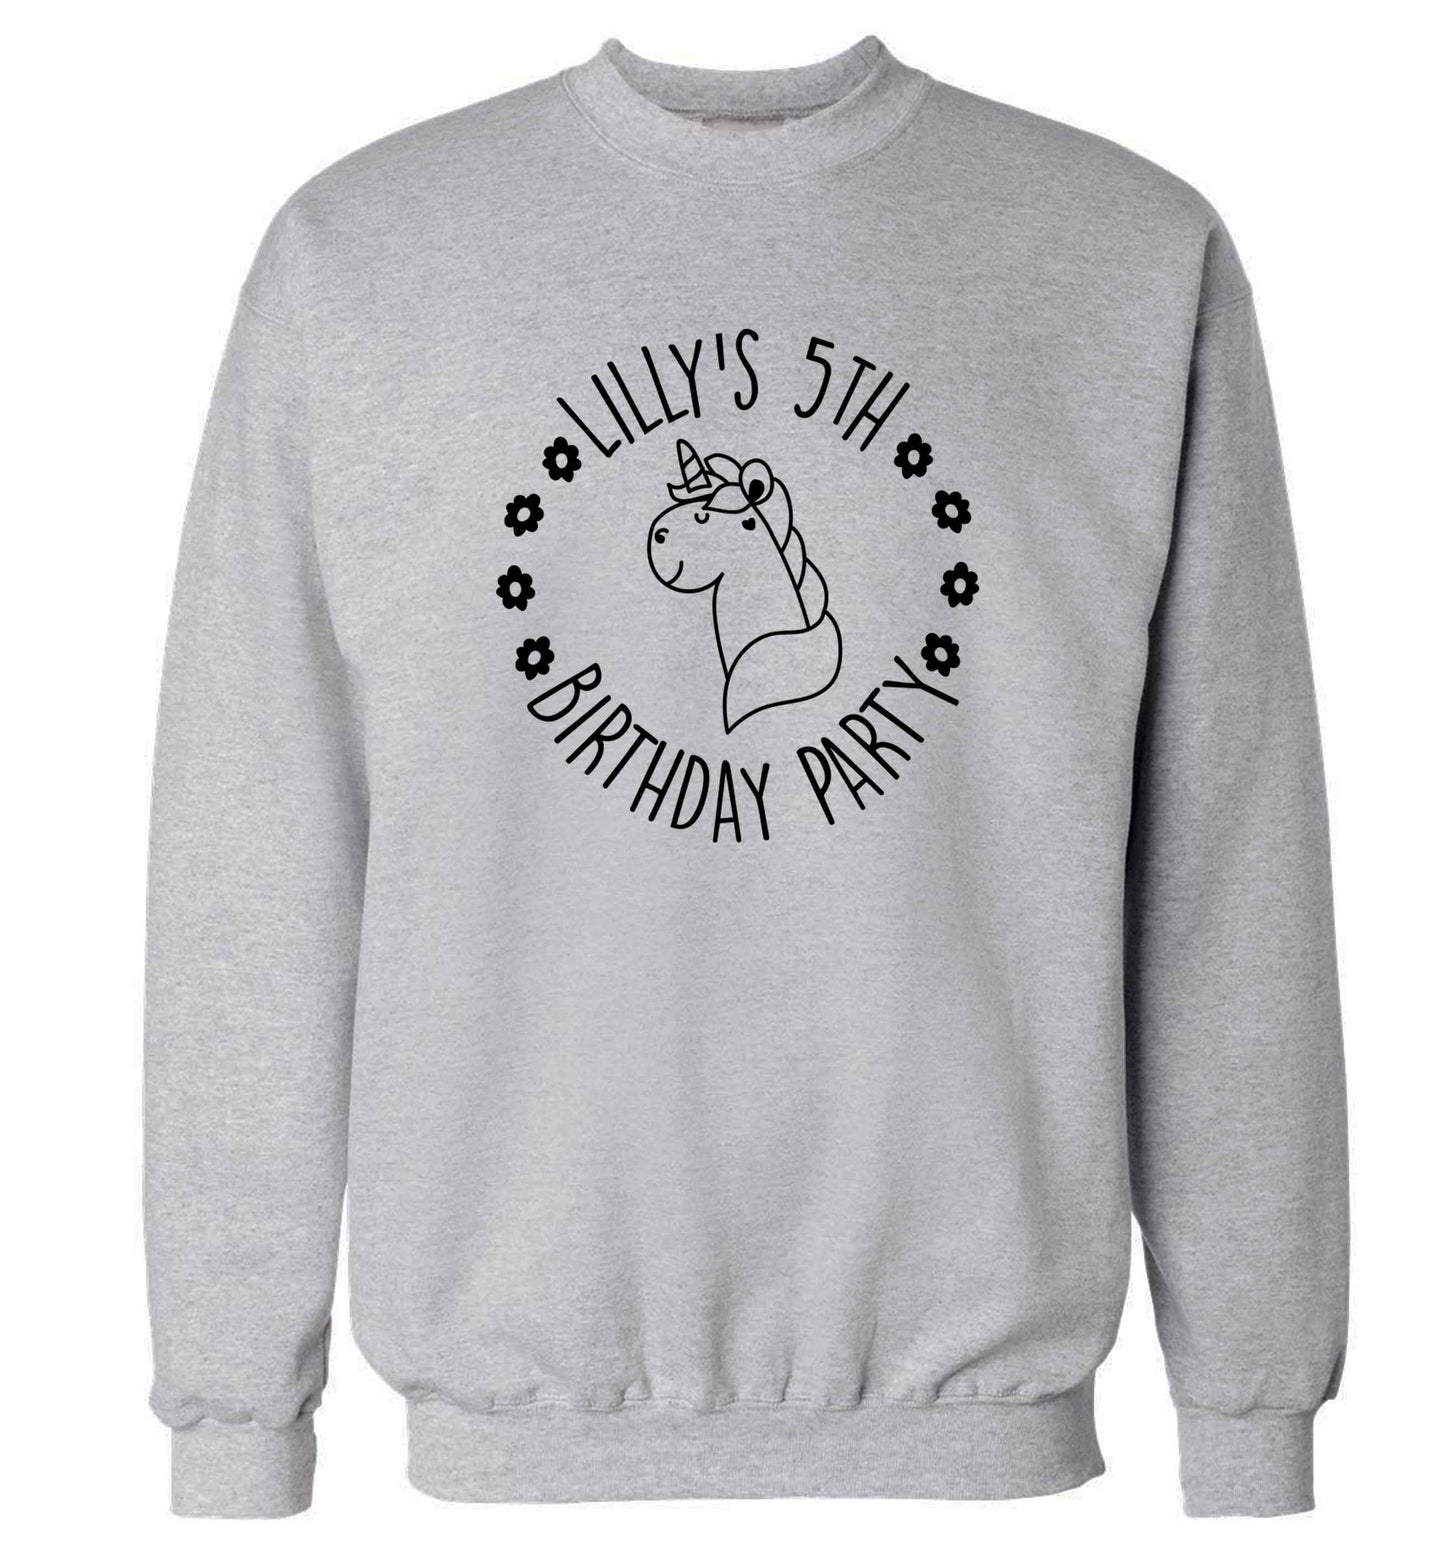 Personalised unicorn birthday party adult's unisex grey sweater 2XL